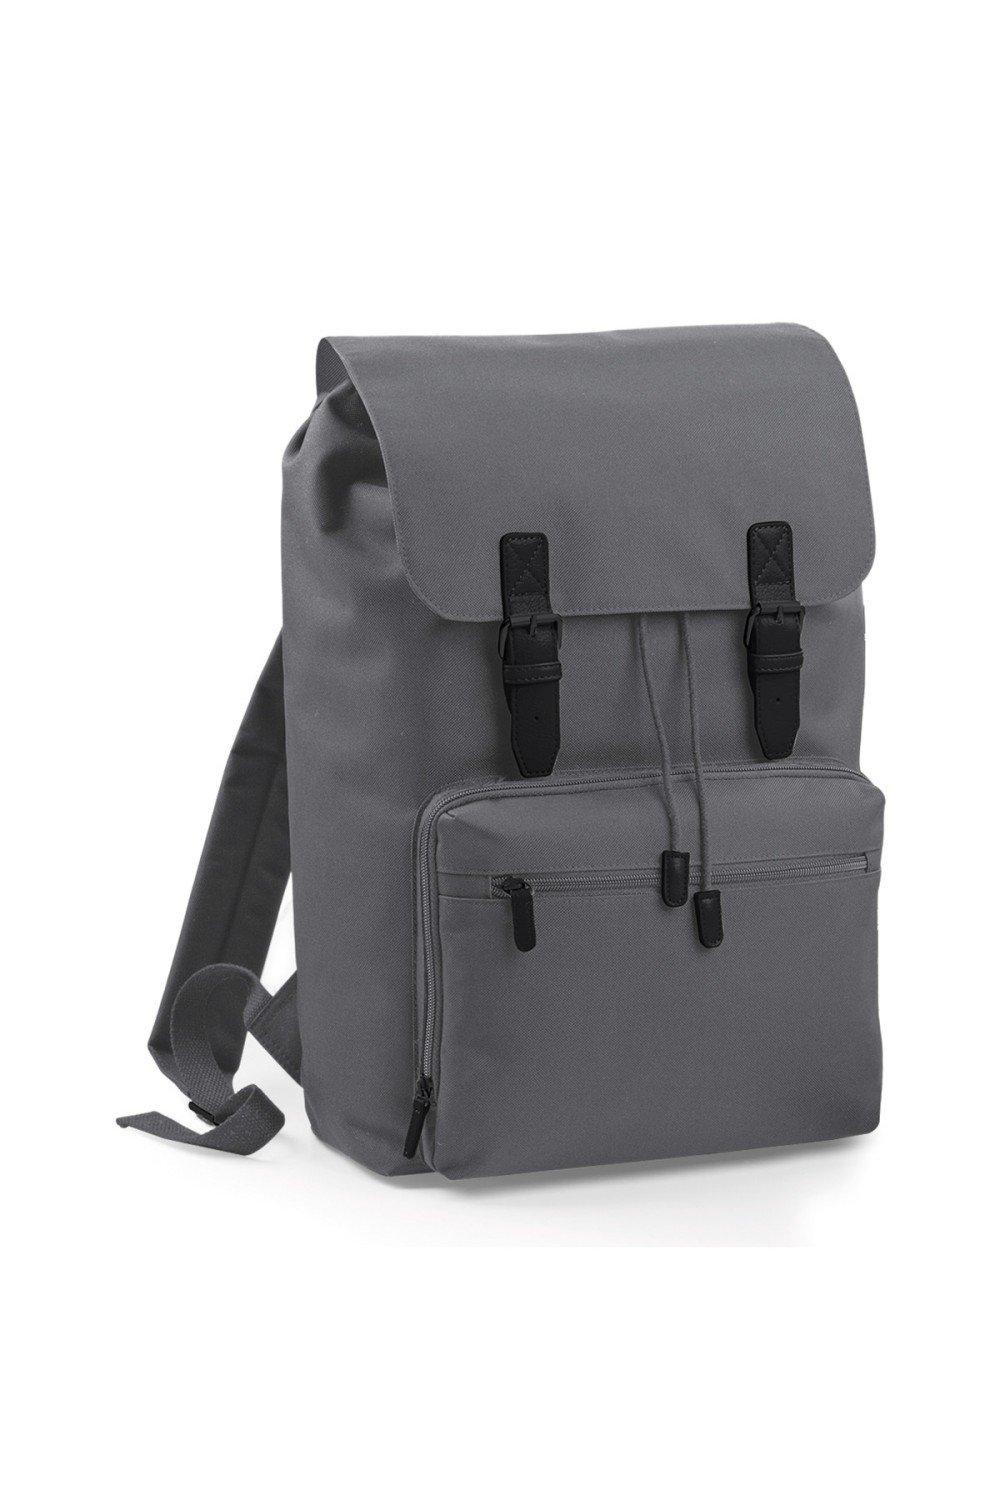 Рюкзак для ноутбука Heritage (для ноутбука с диагональю до 17 дюймов) Bagbase, серый рюкзак для ноутбука overland 17 дюймов tsa avenue серый